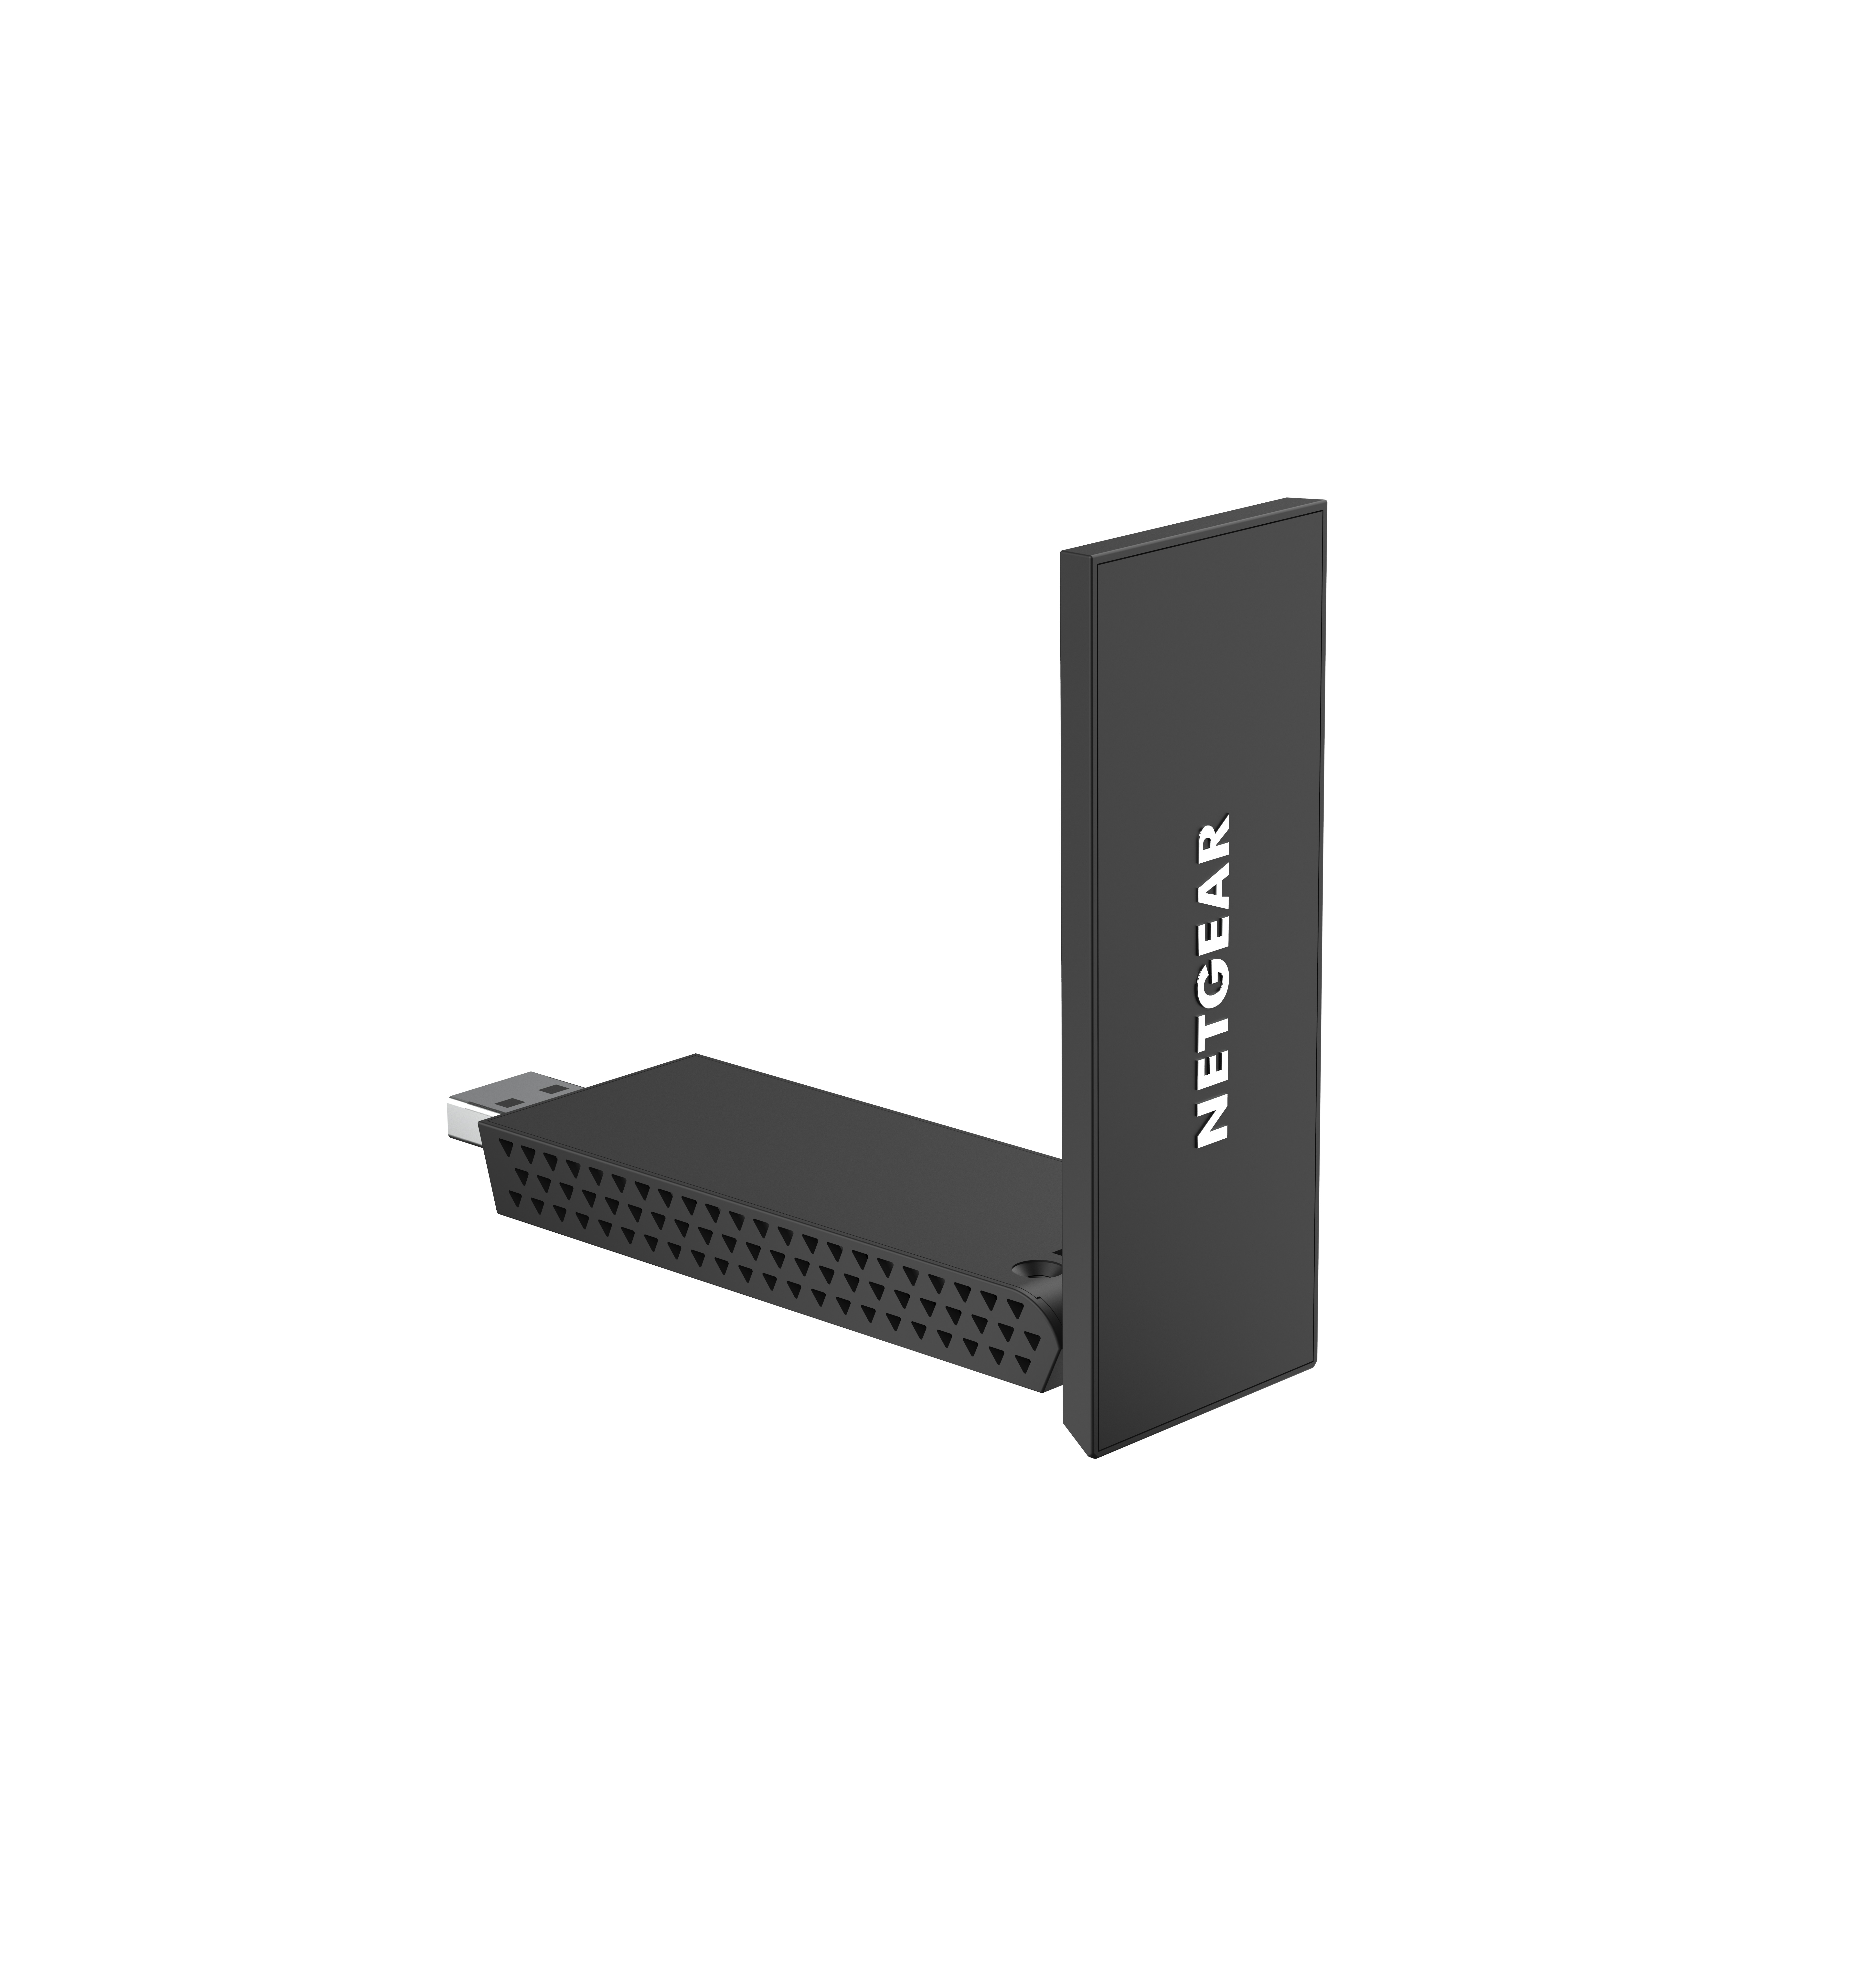 NETGEAR Nighthawk AXE3000 WiFi 6E USB 3.0 Adapter, up to 3Gbps (A8000-100PAS) - image 1 of 5